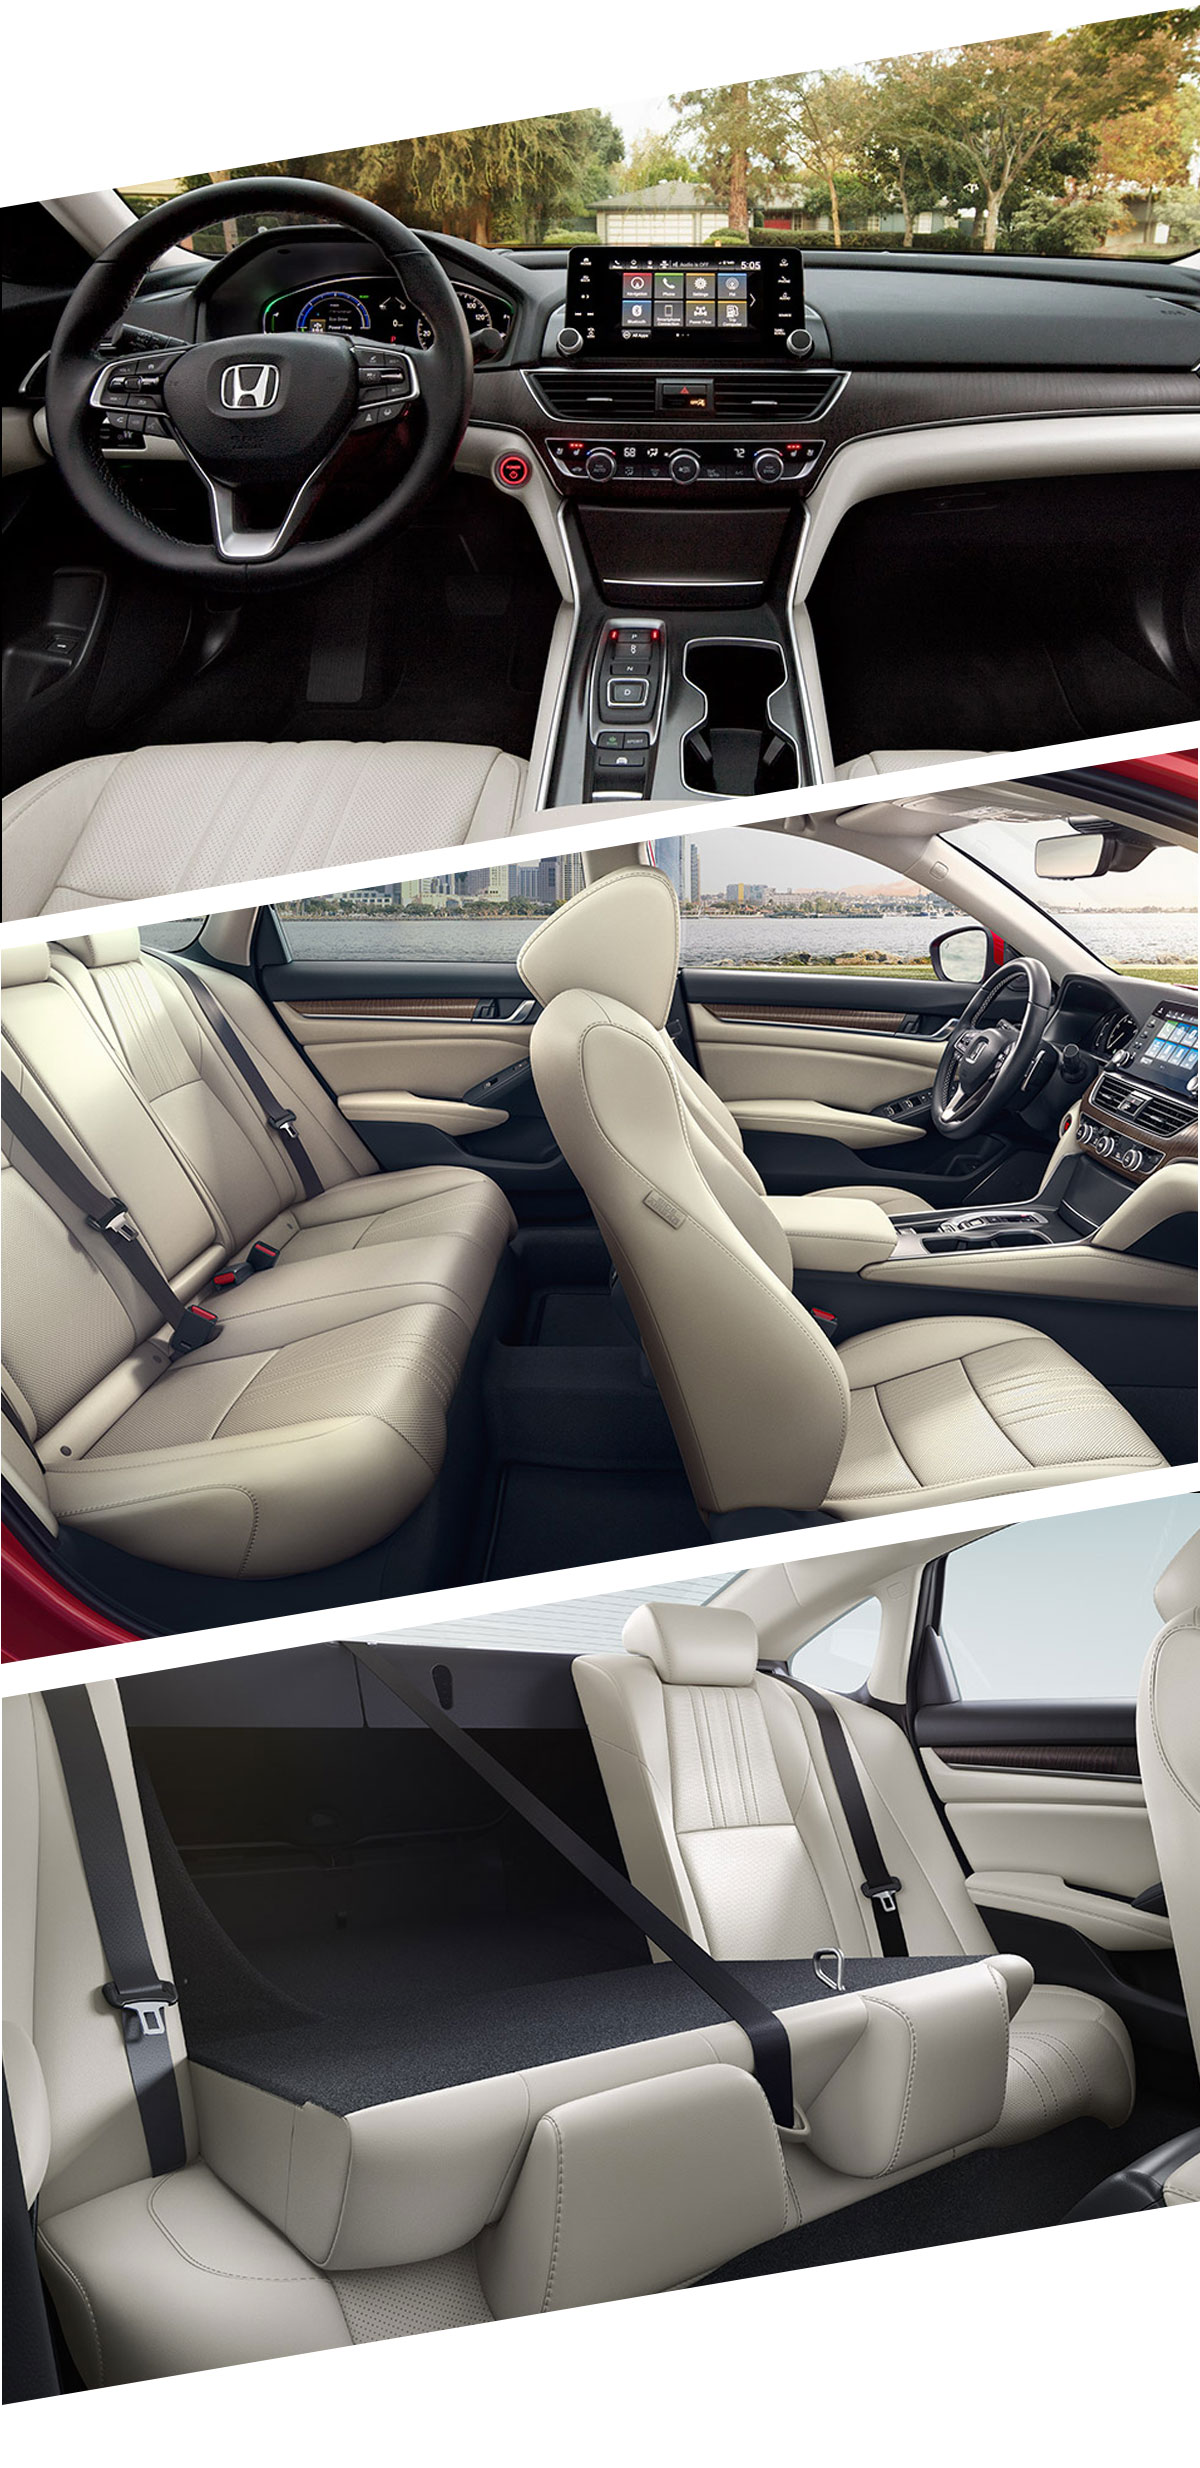 Honda Accord Interior Images